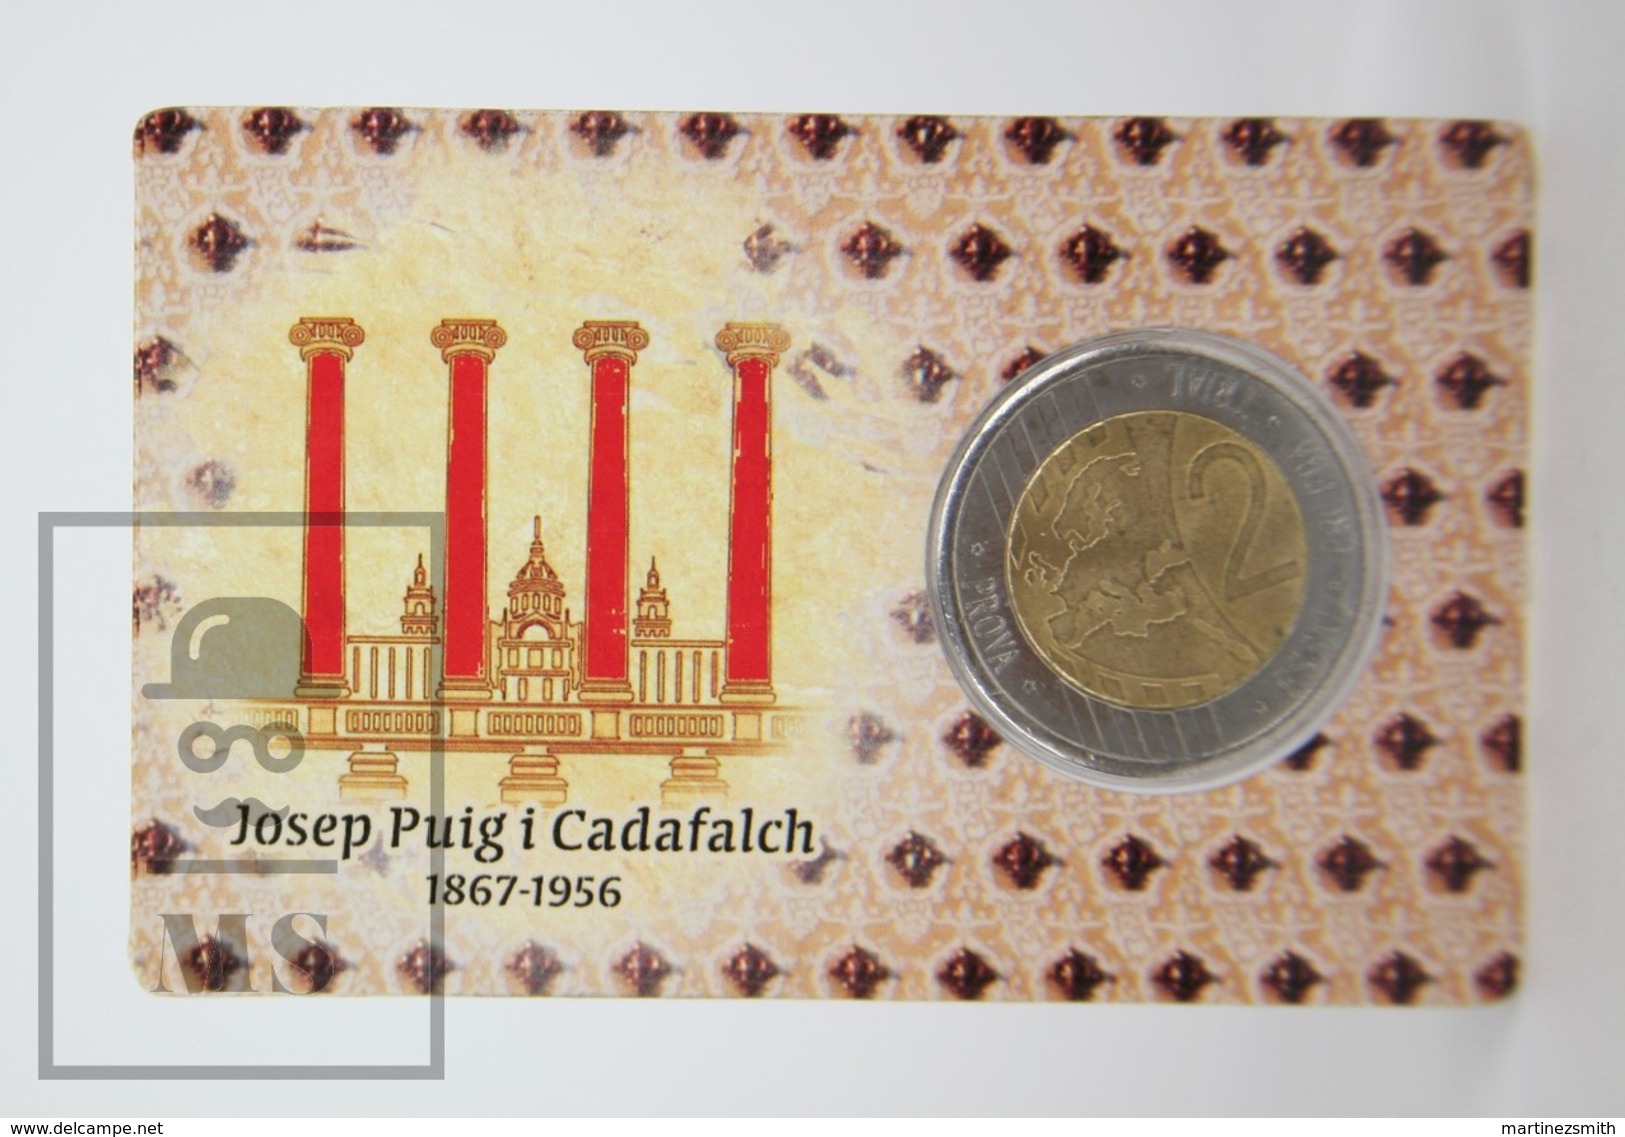 Catalunya/ Catalonia 2017 Private Proof Commemorative 2 Euro Coin Card - Josep Puig I Cadafalch Anniversary - Pruebas Privadas